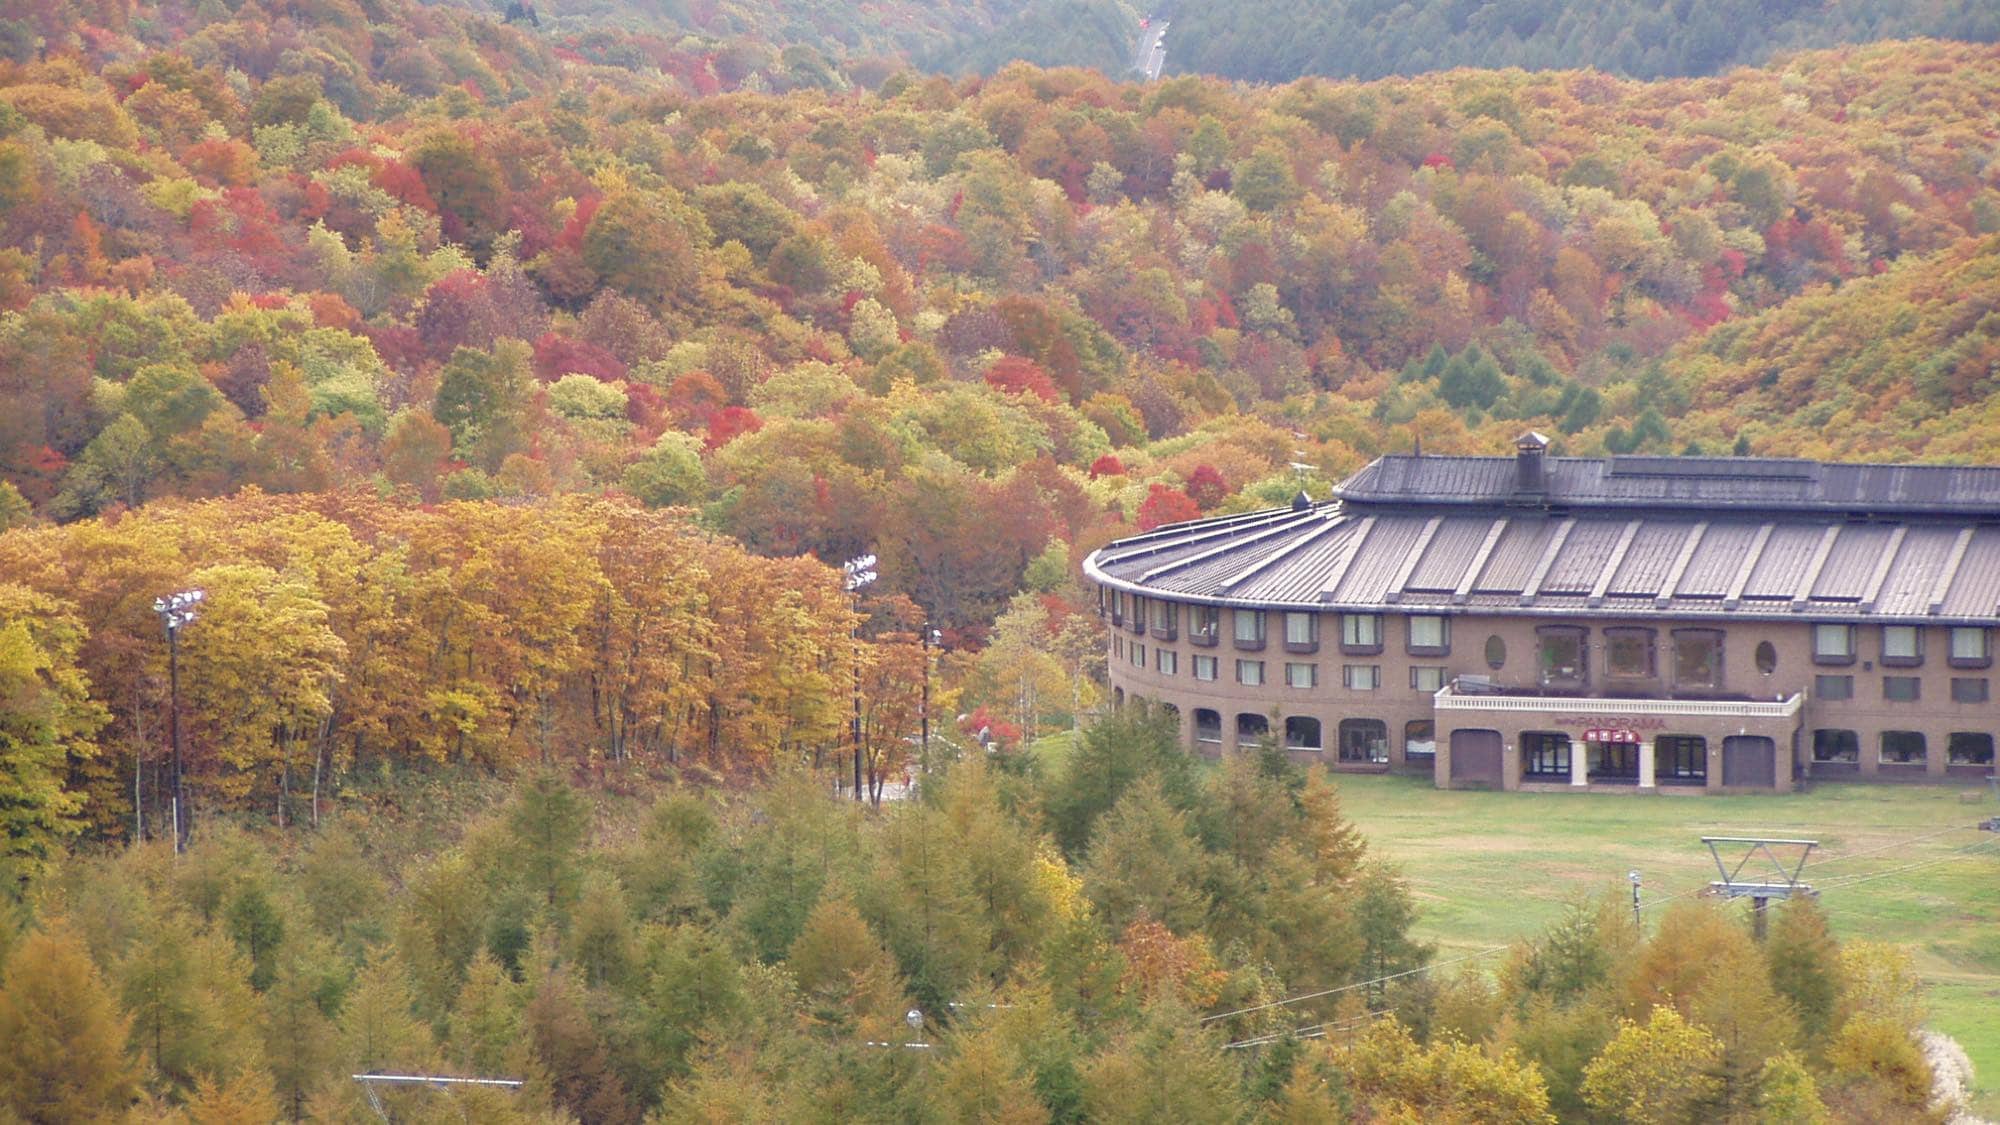 Bahkan di musim gugur daun, Anda dapat menikmati suasana yang fantastis dengan pegunungan berwarna 360 derajat.